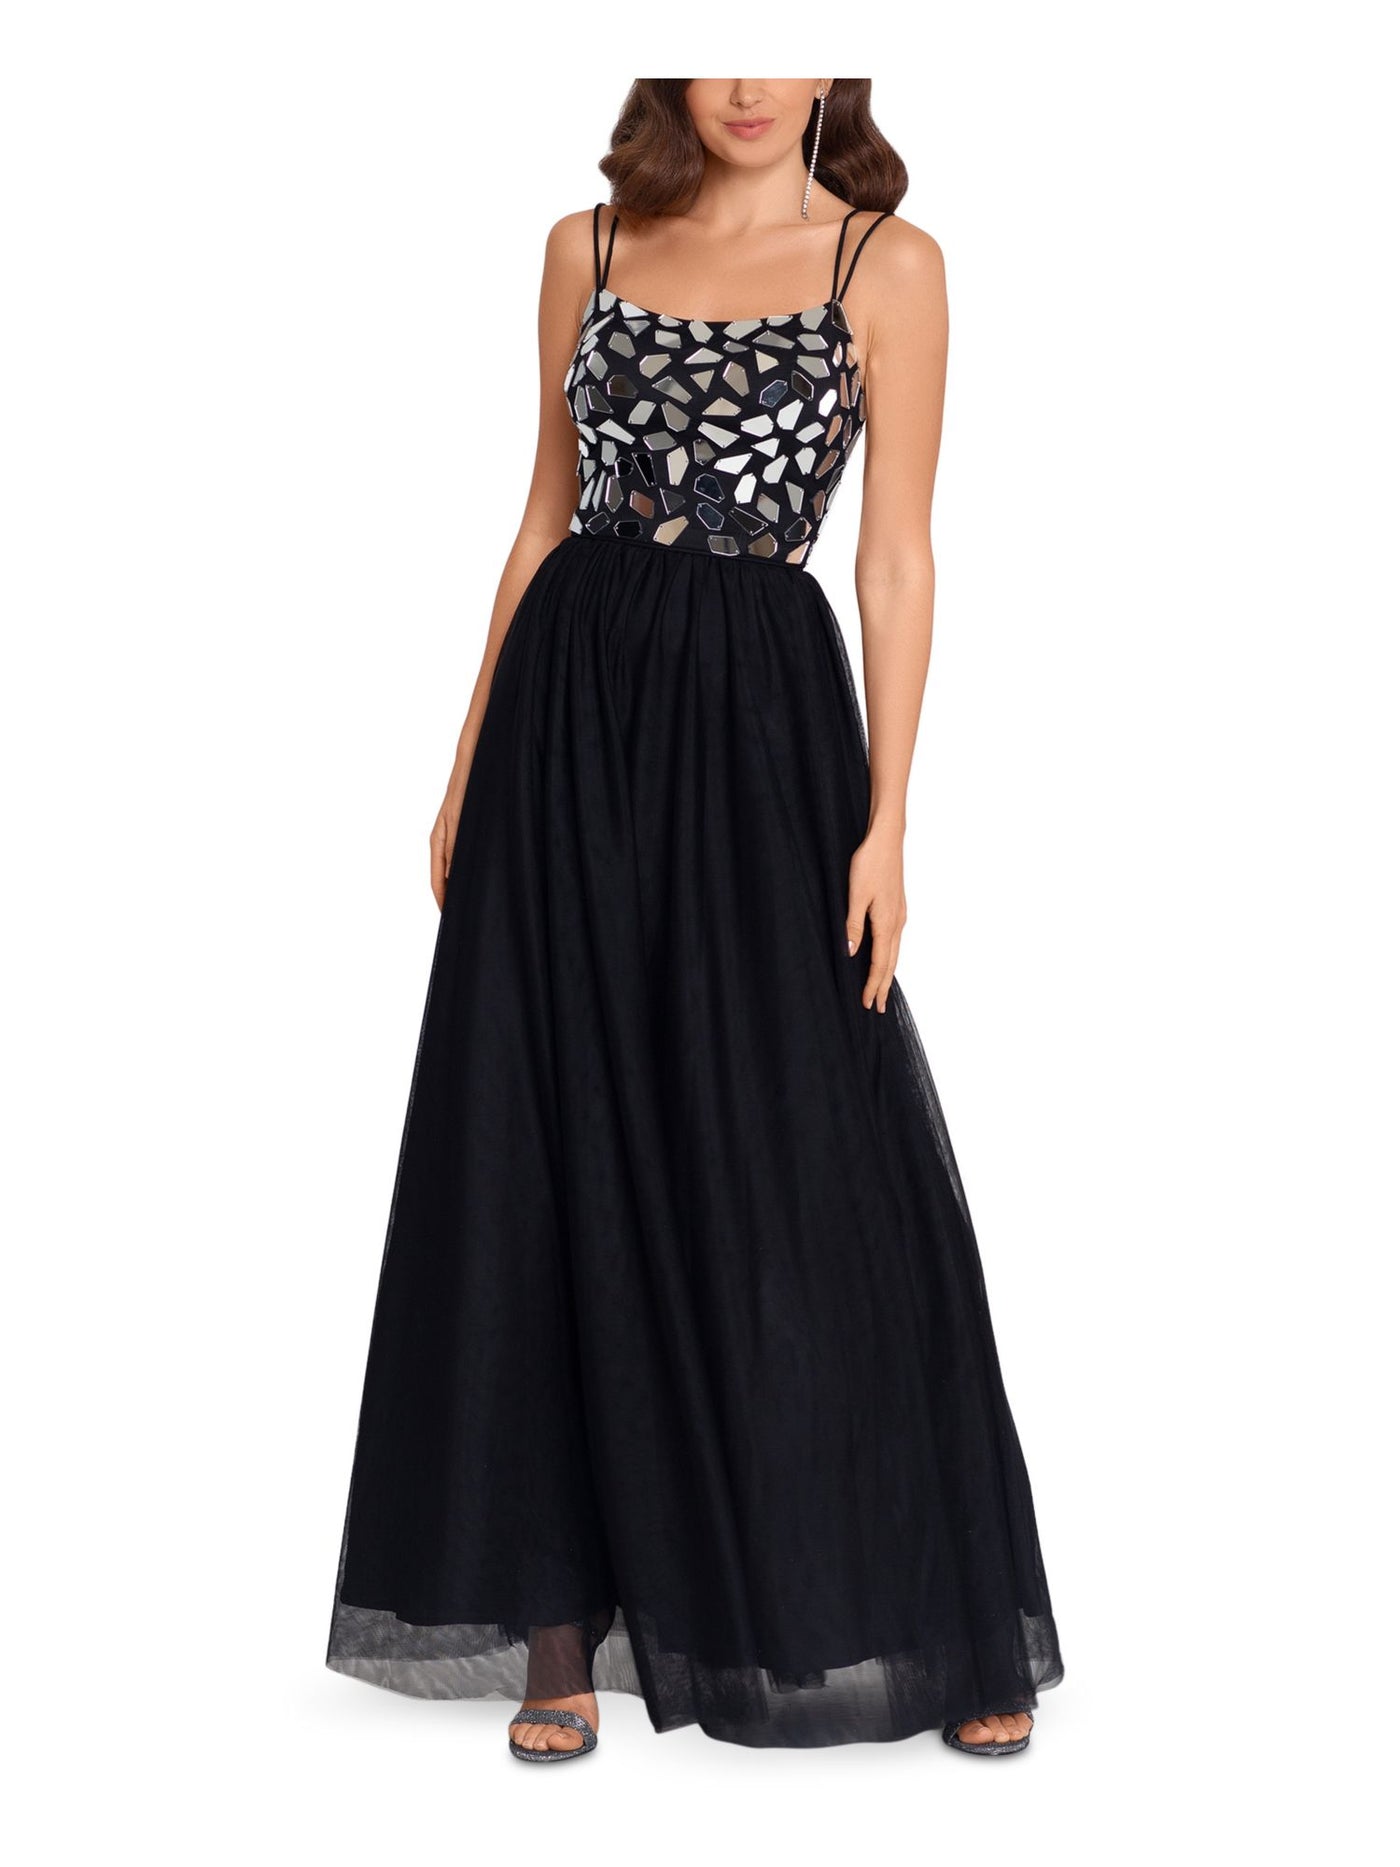 BLONDIE NITES Womens Black Embellished Spaghetti Strap Scoop Neck Full-Length Formal Fit + Flare Dress Juniors 9